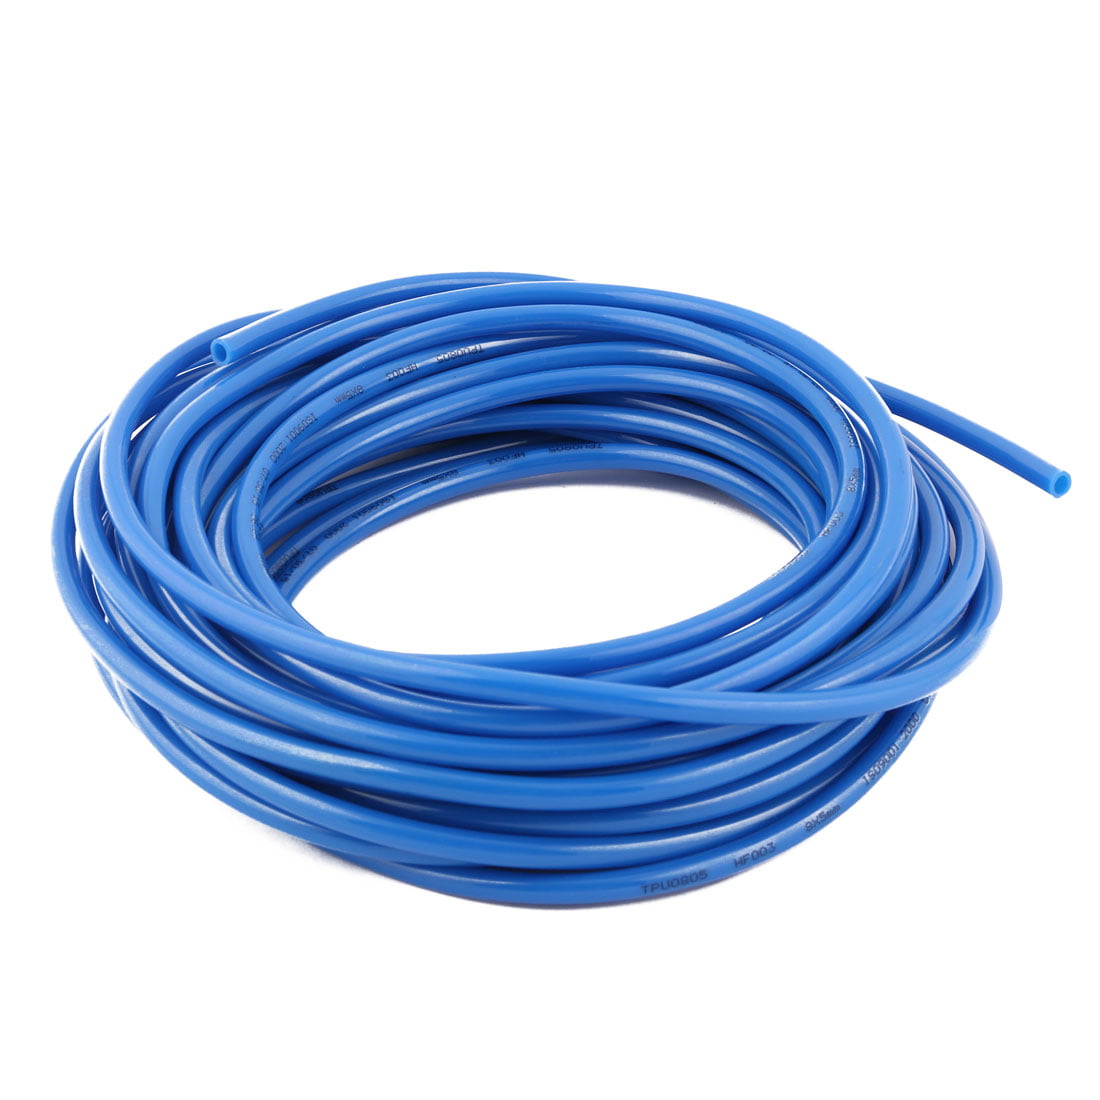 5 x 8mm Fuel Gas Air flex Polyurethane PU Pneumatic Tube Hose Pipe-BLUE 